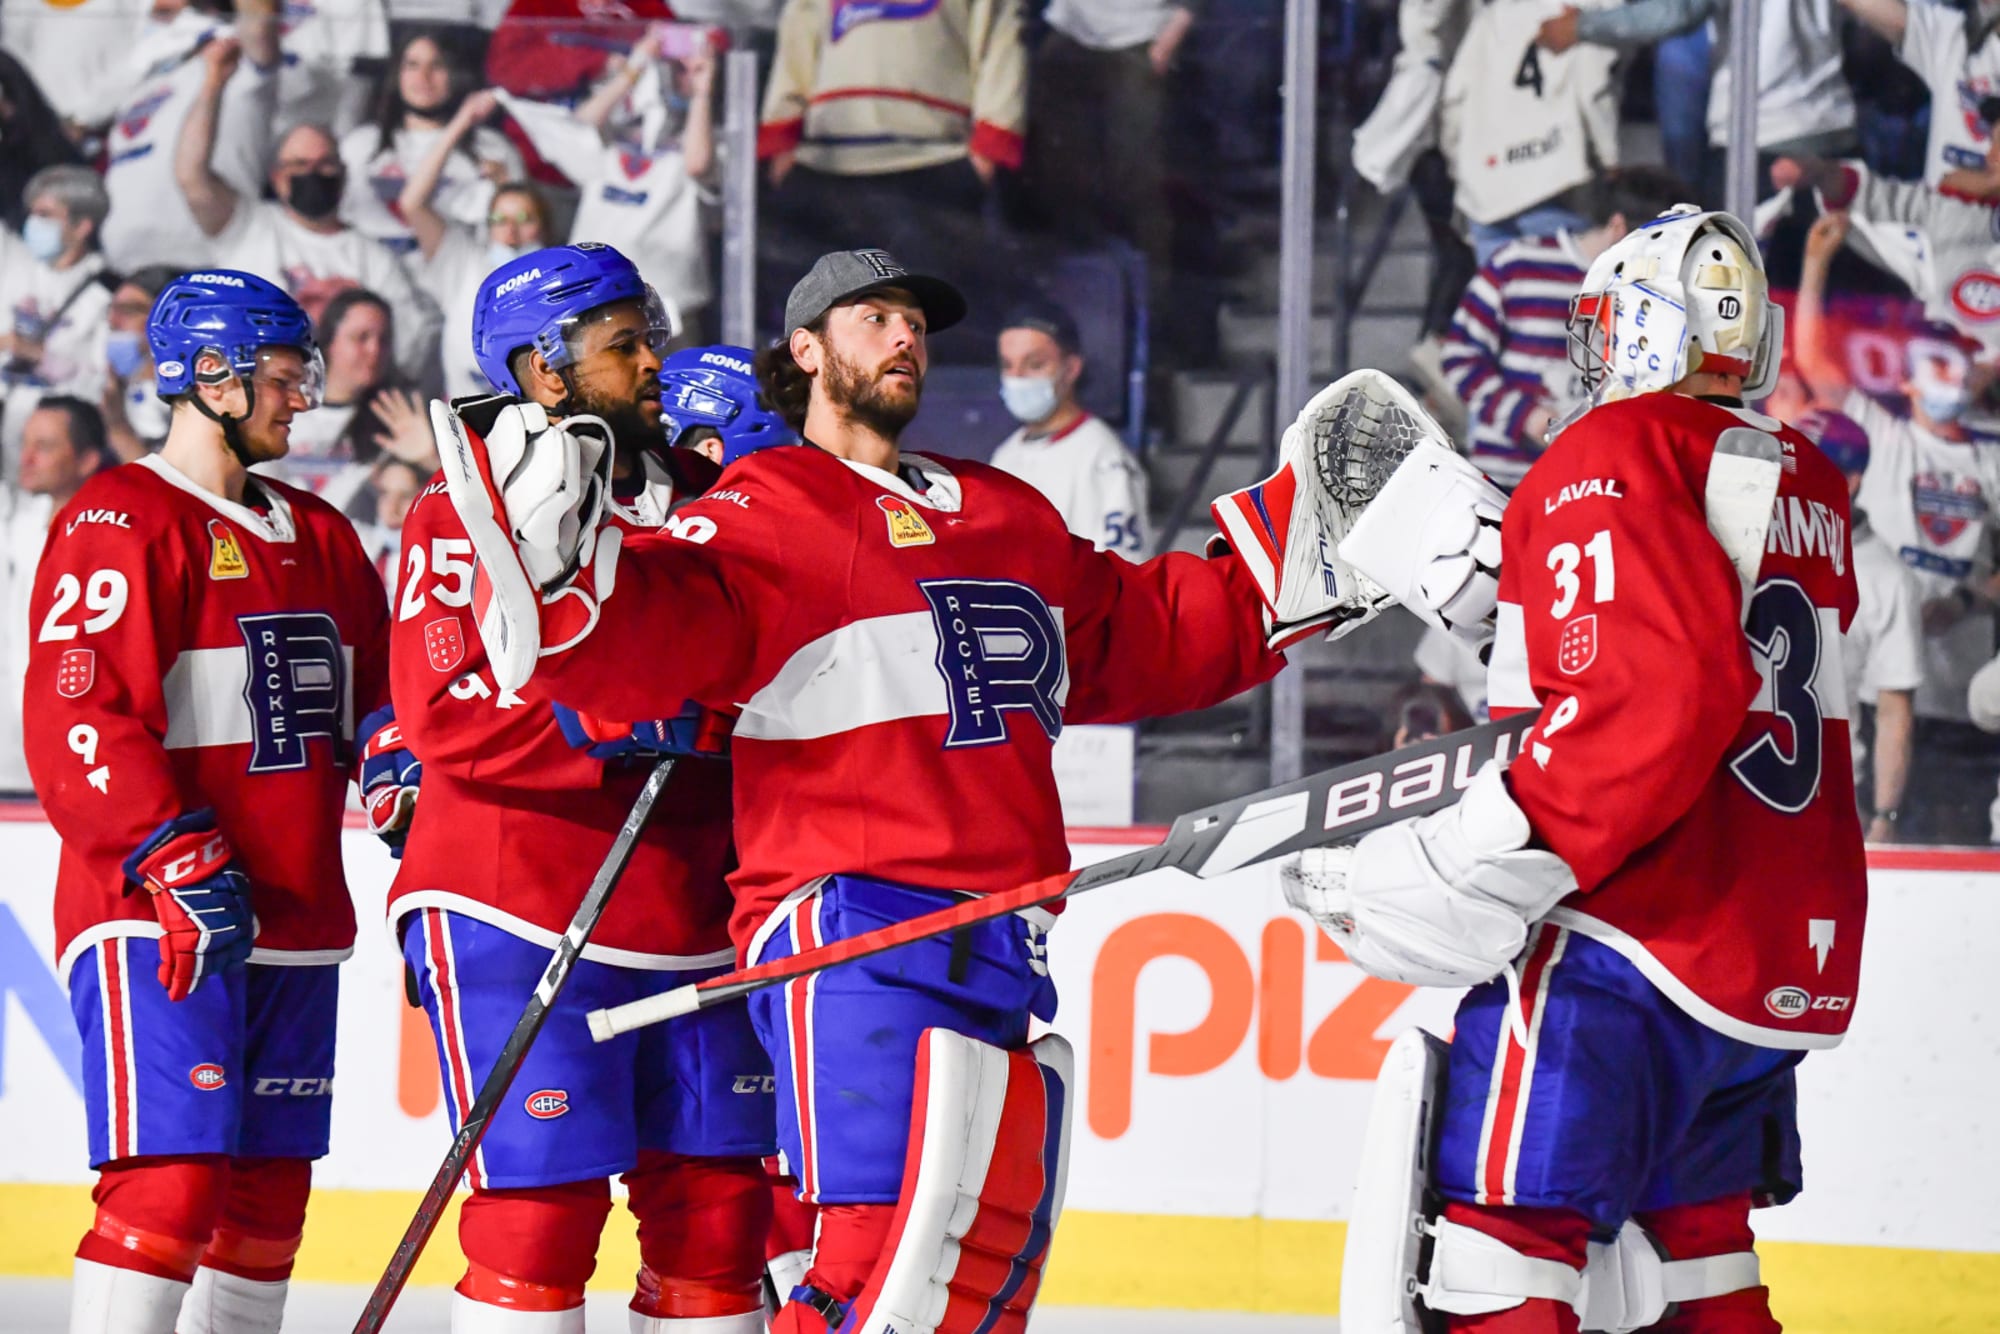 Canadiens de Montréal (@canadiensmtl) • Instagram photos and videos